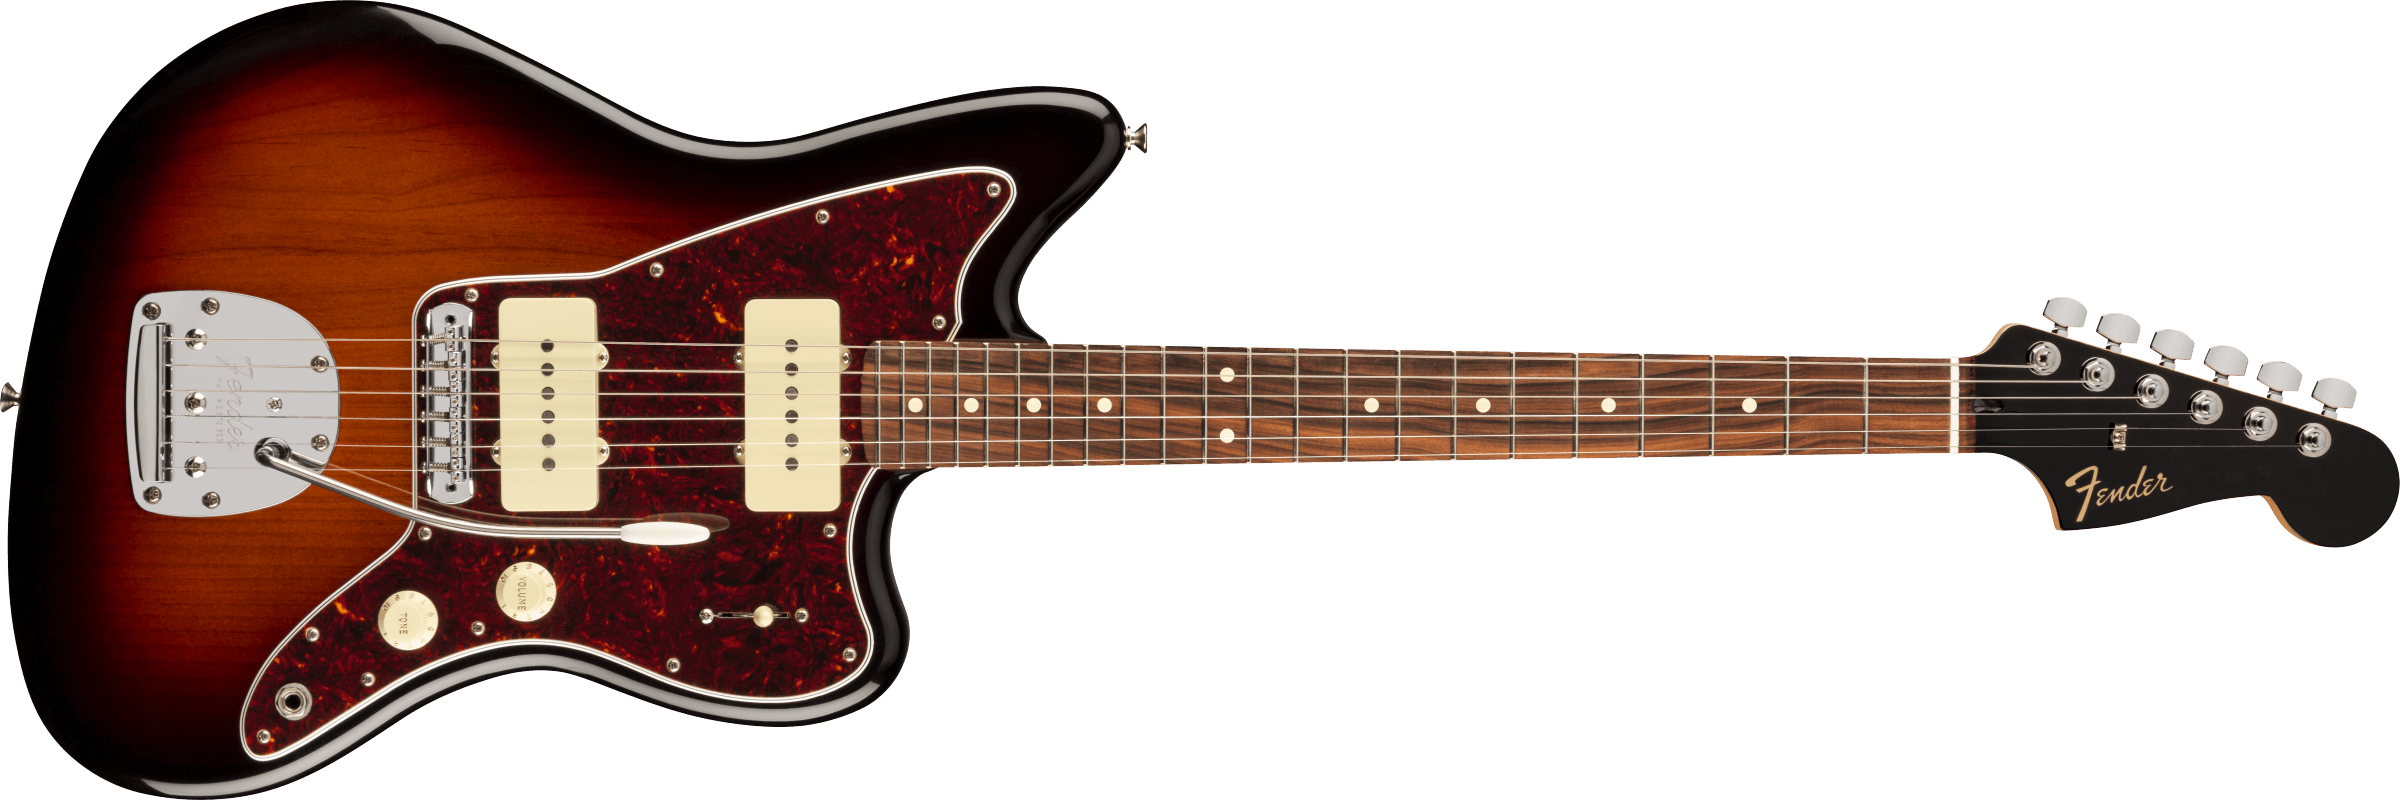 Fender Limited Edition Player Jazzmaster 3 Color Sunburst with Tortoiseshell Pickguard 0146902500